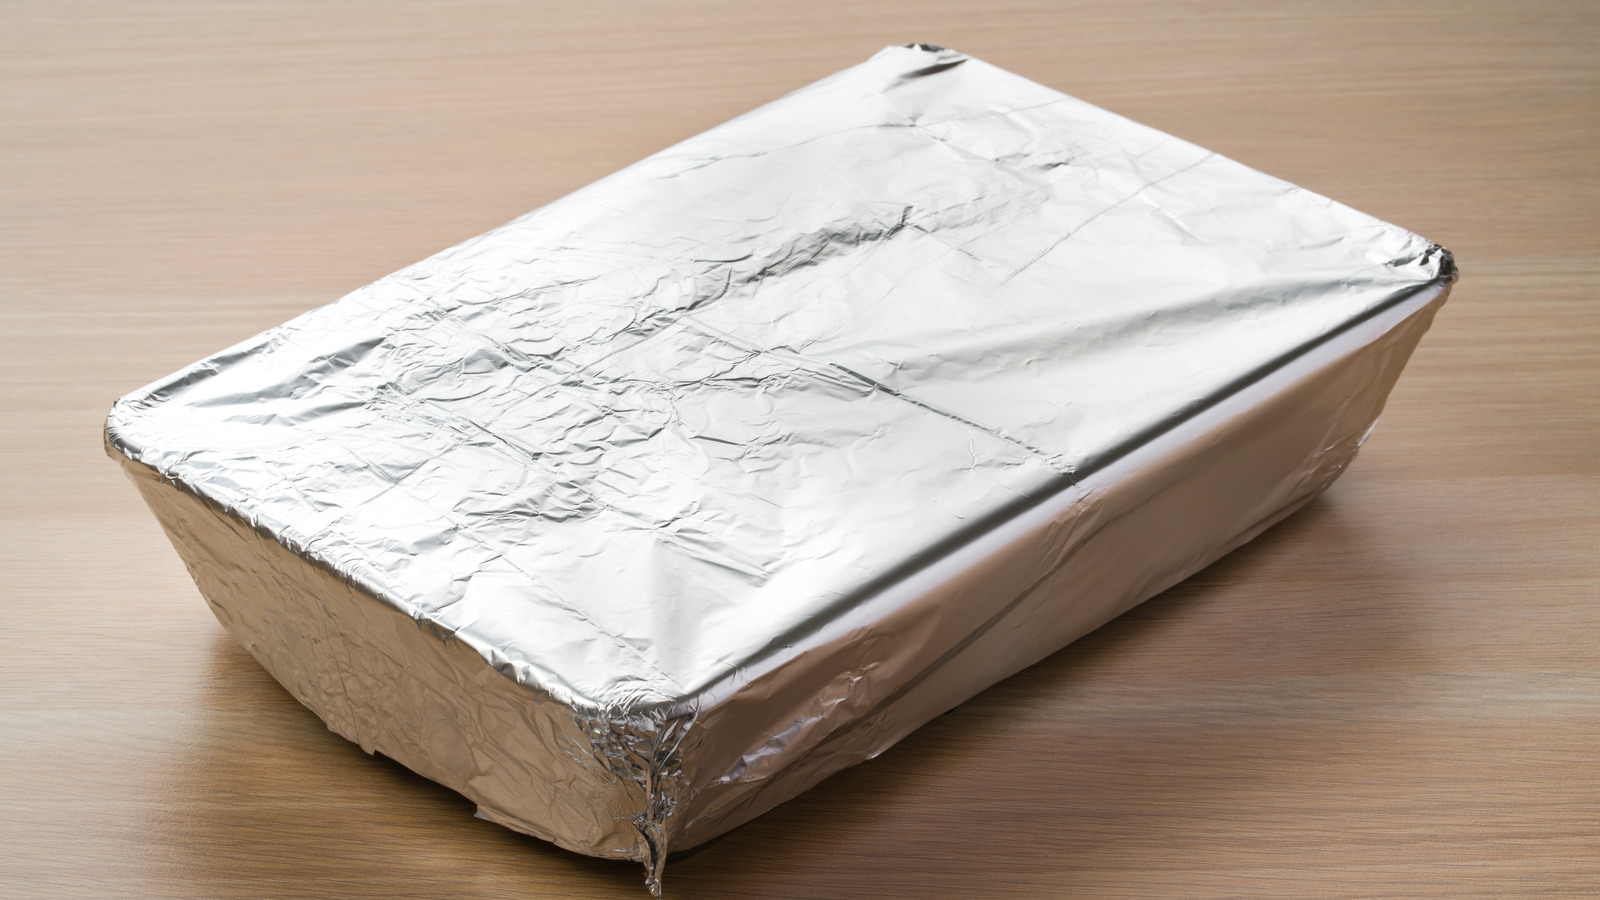 Aluminum Foil (and Plastic Wrap) Alternatives